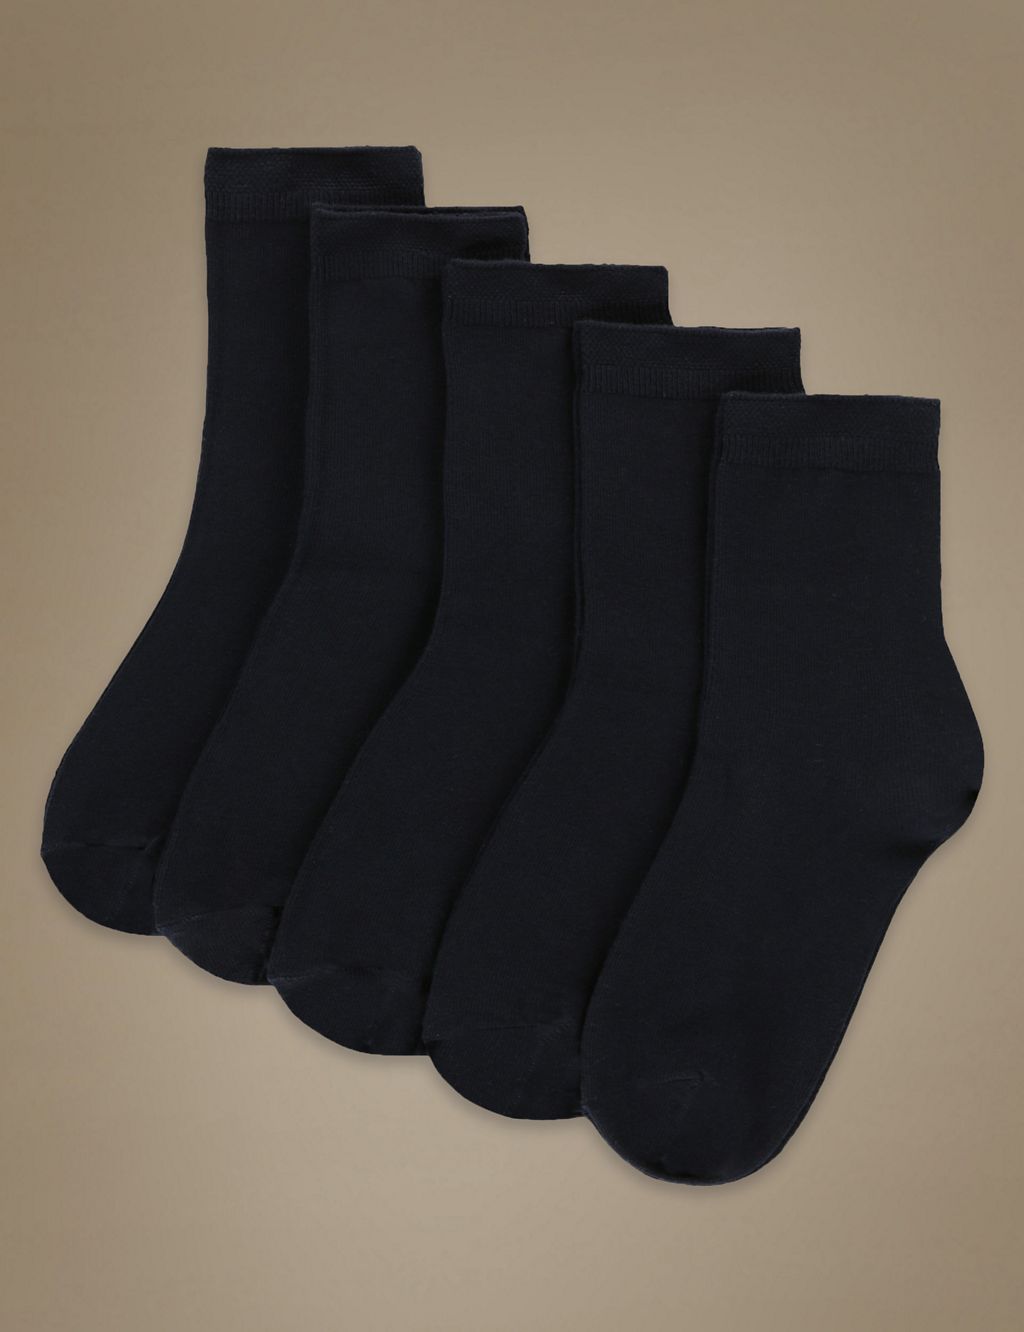 5 Pair Pack Ankle High Socks 1 of 3